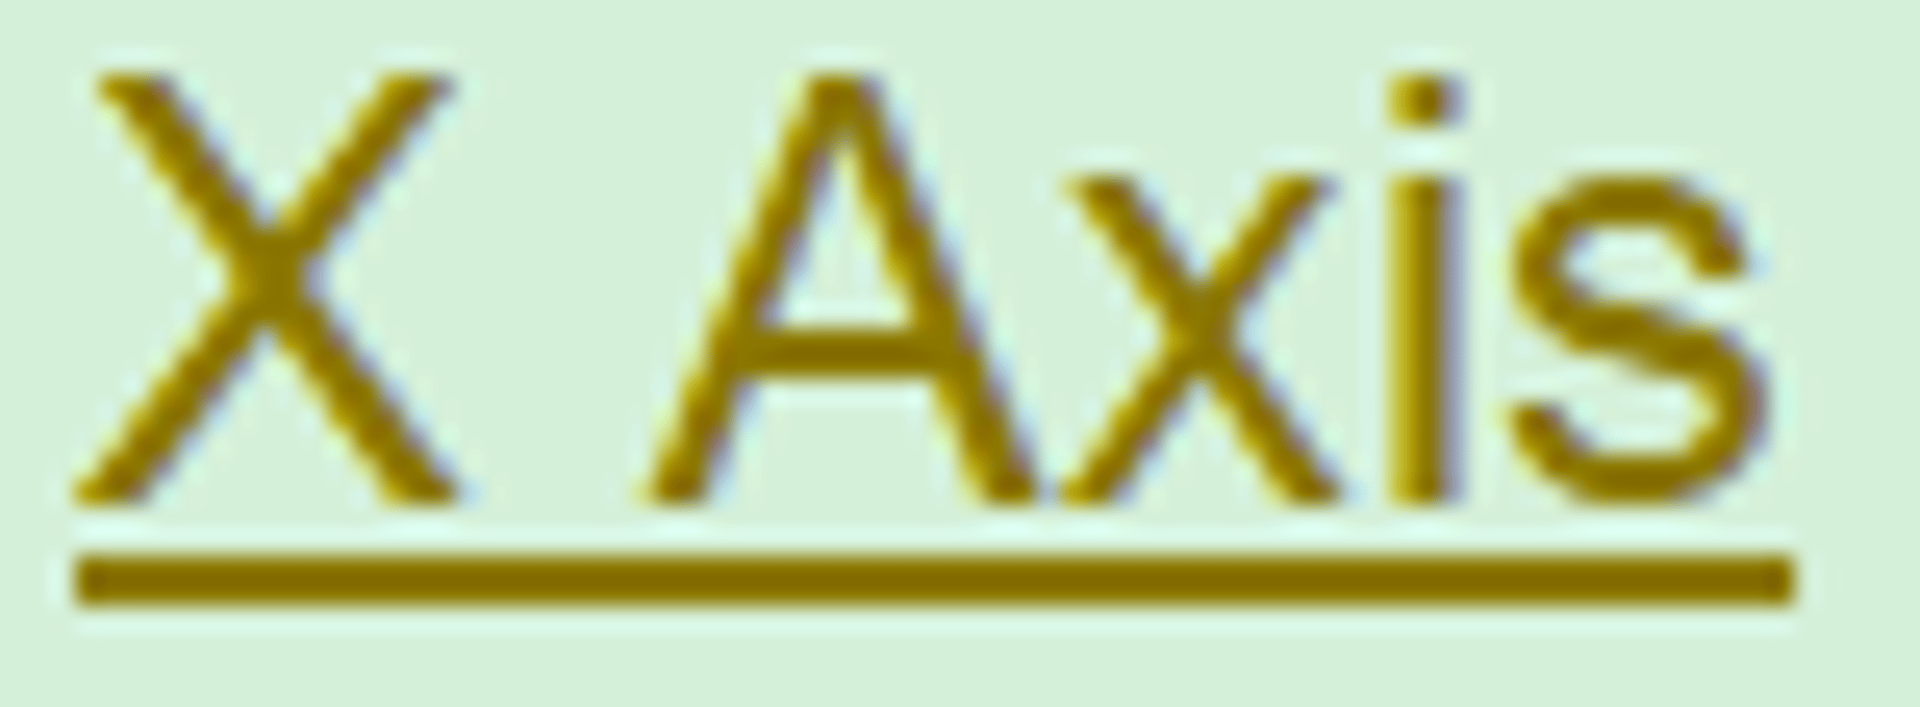 X Axis